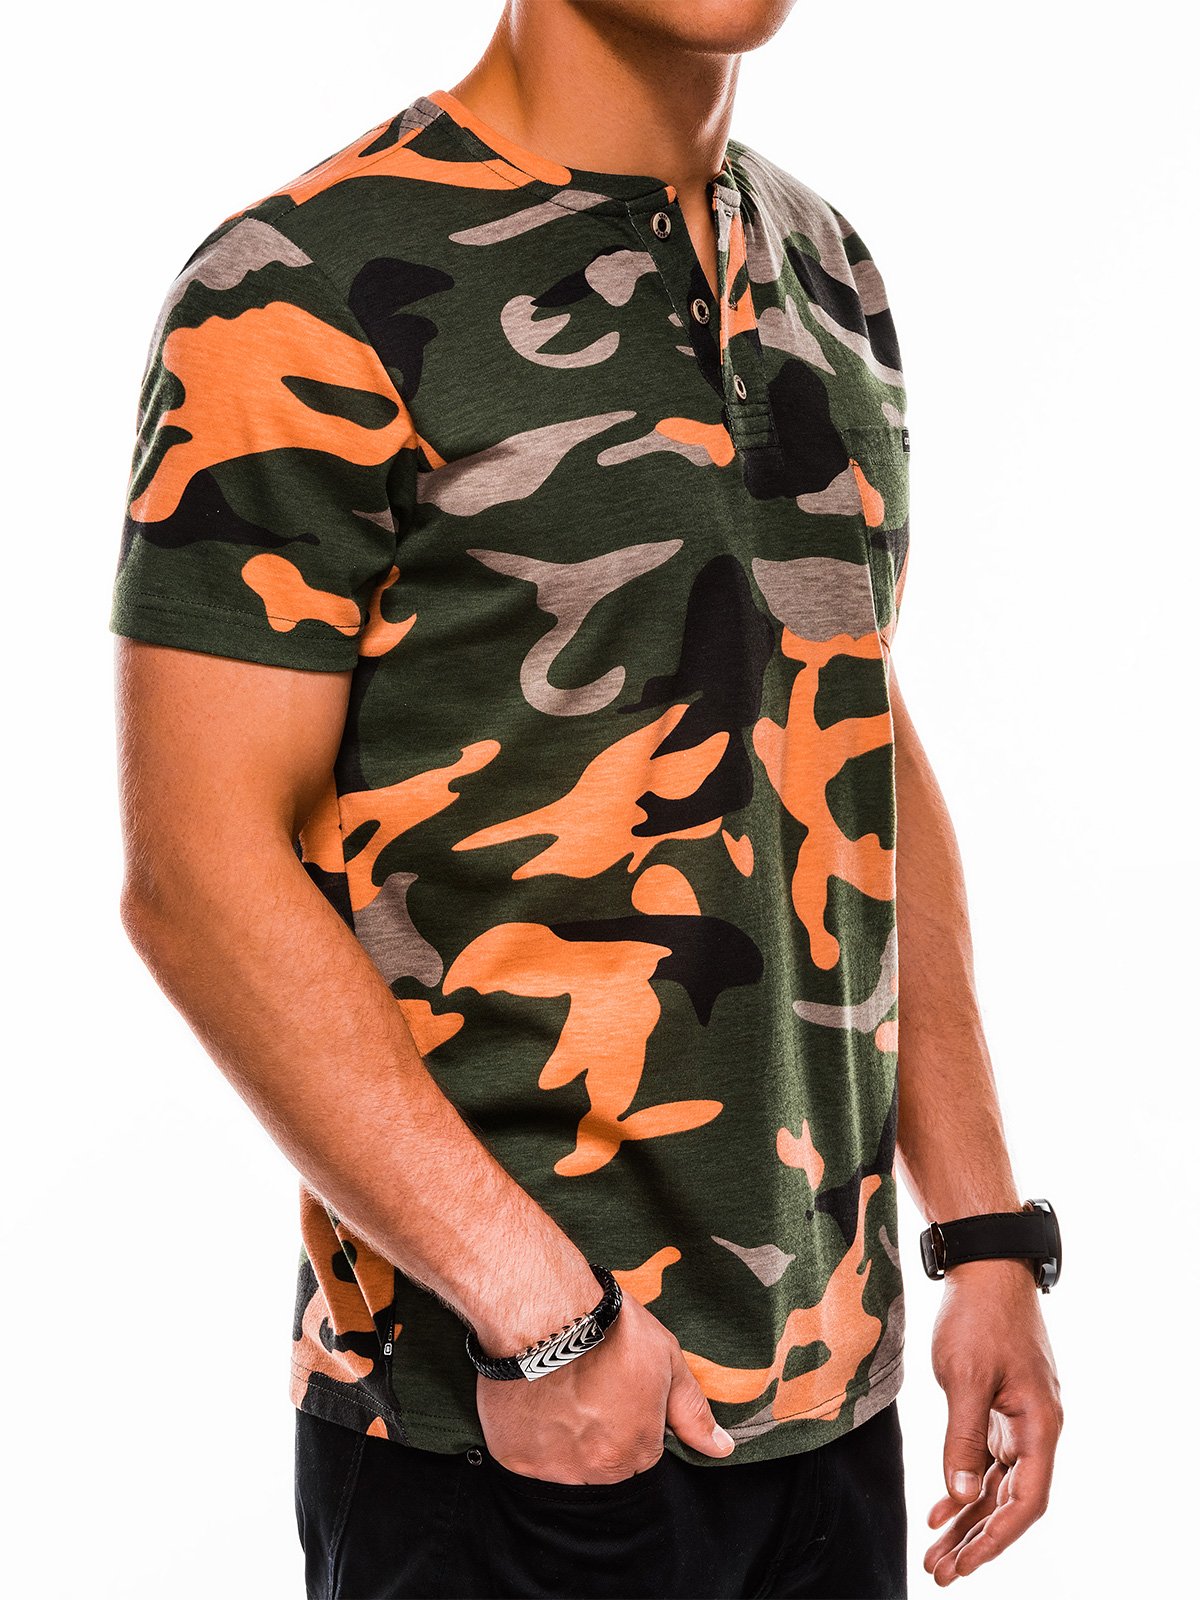 Men's printed t-shirt S1040 - green/orange | MODONE wholesale ...